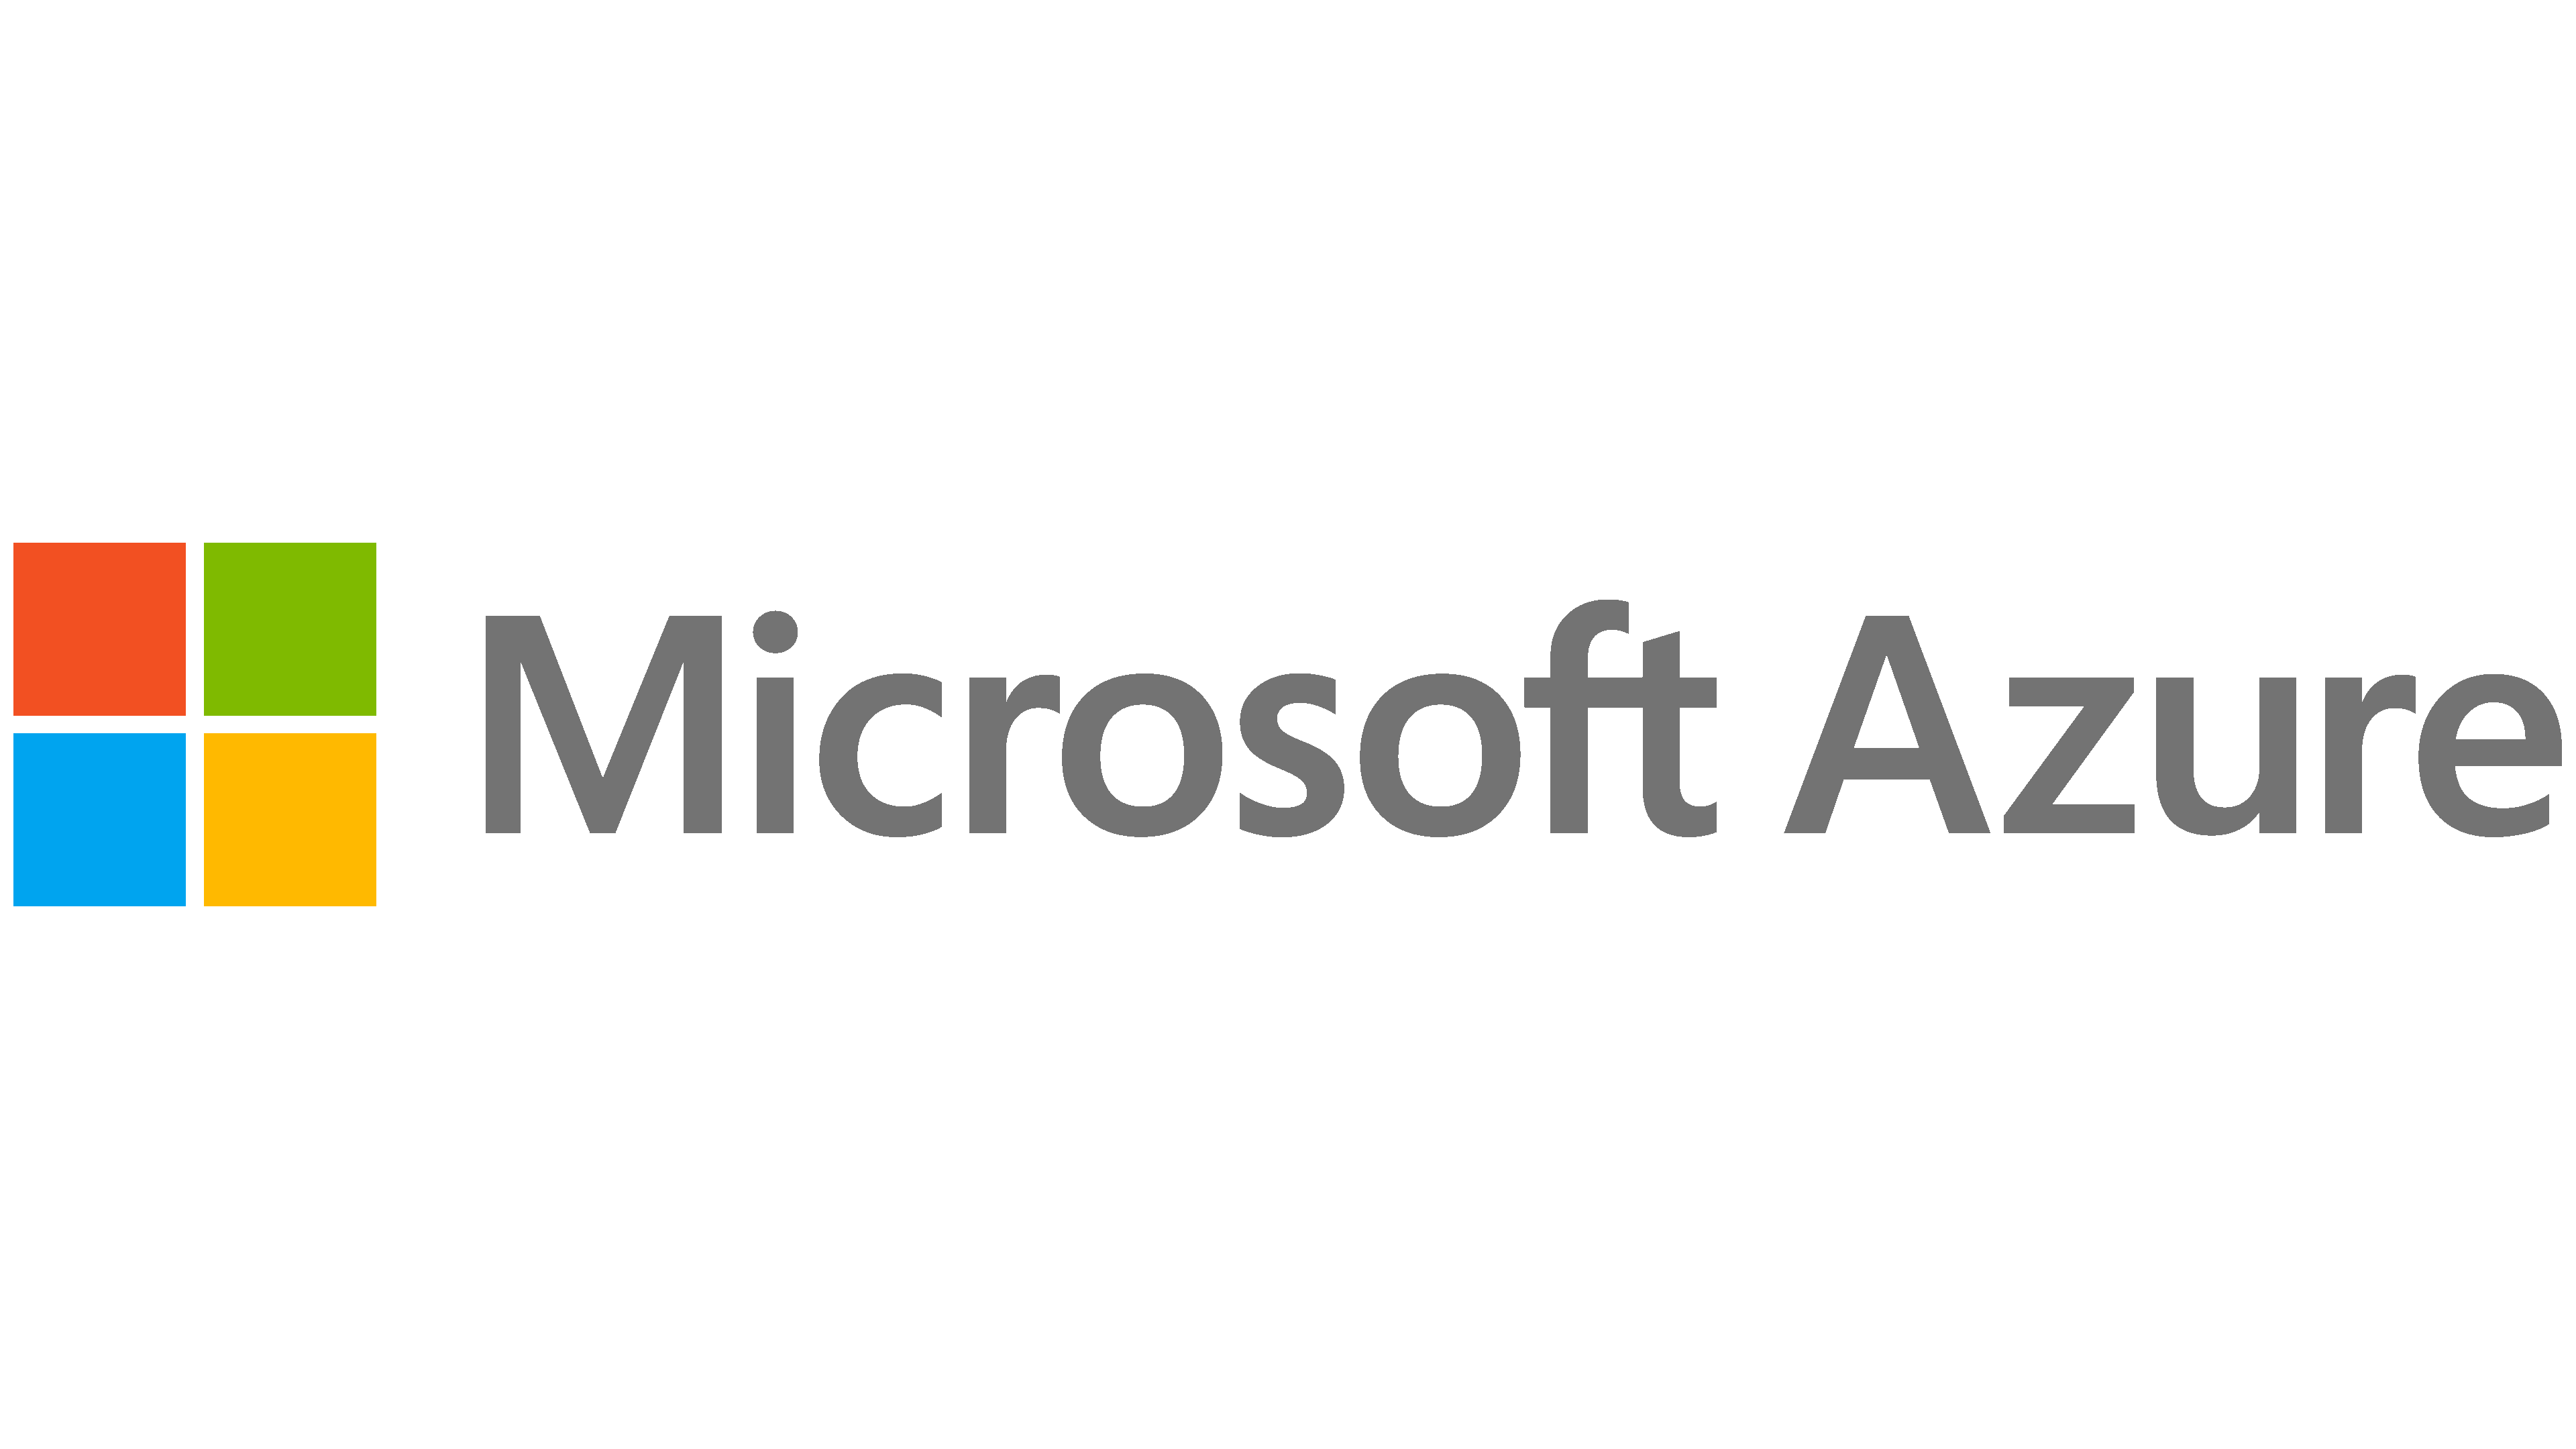 Microsoft-Azure-Logo